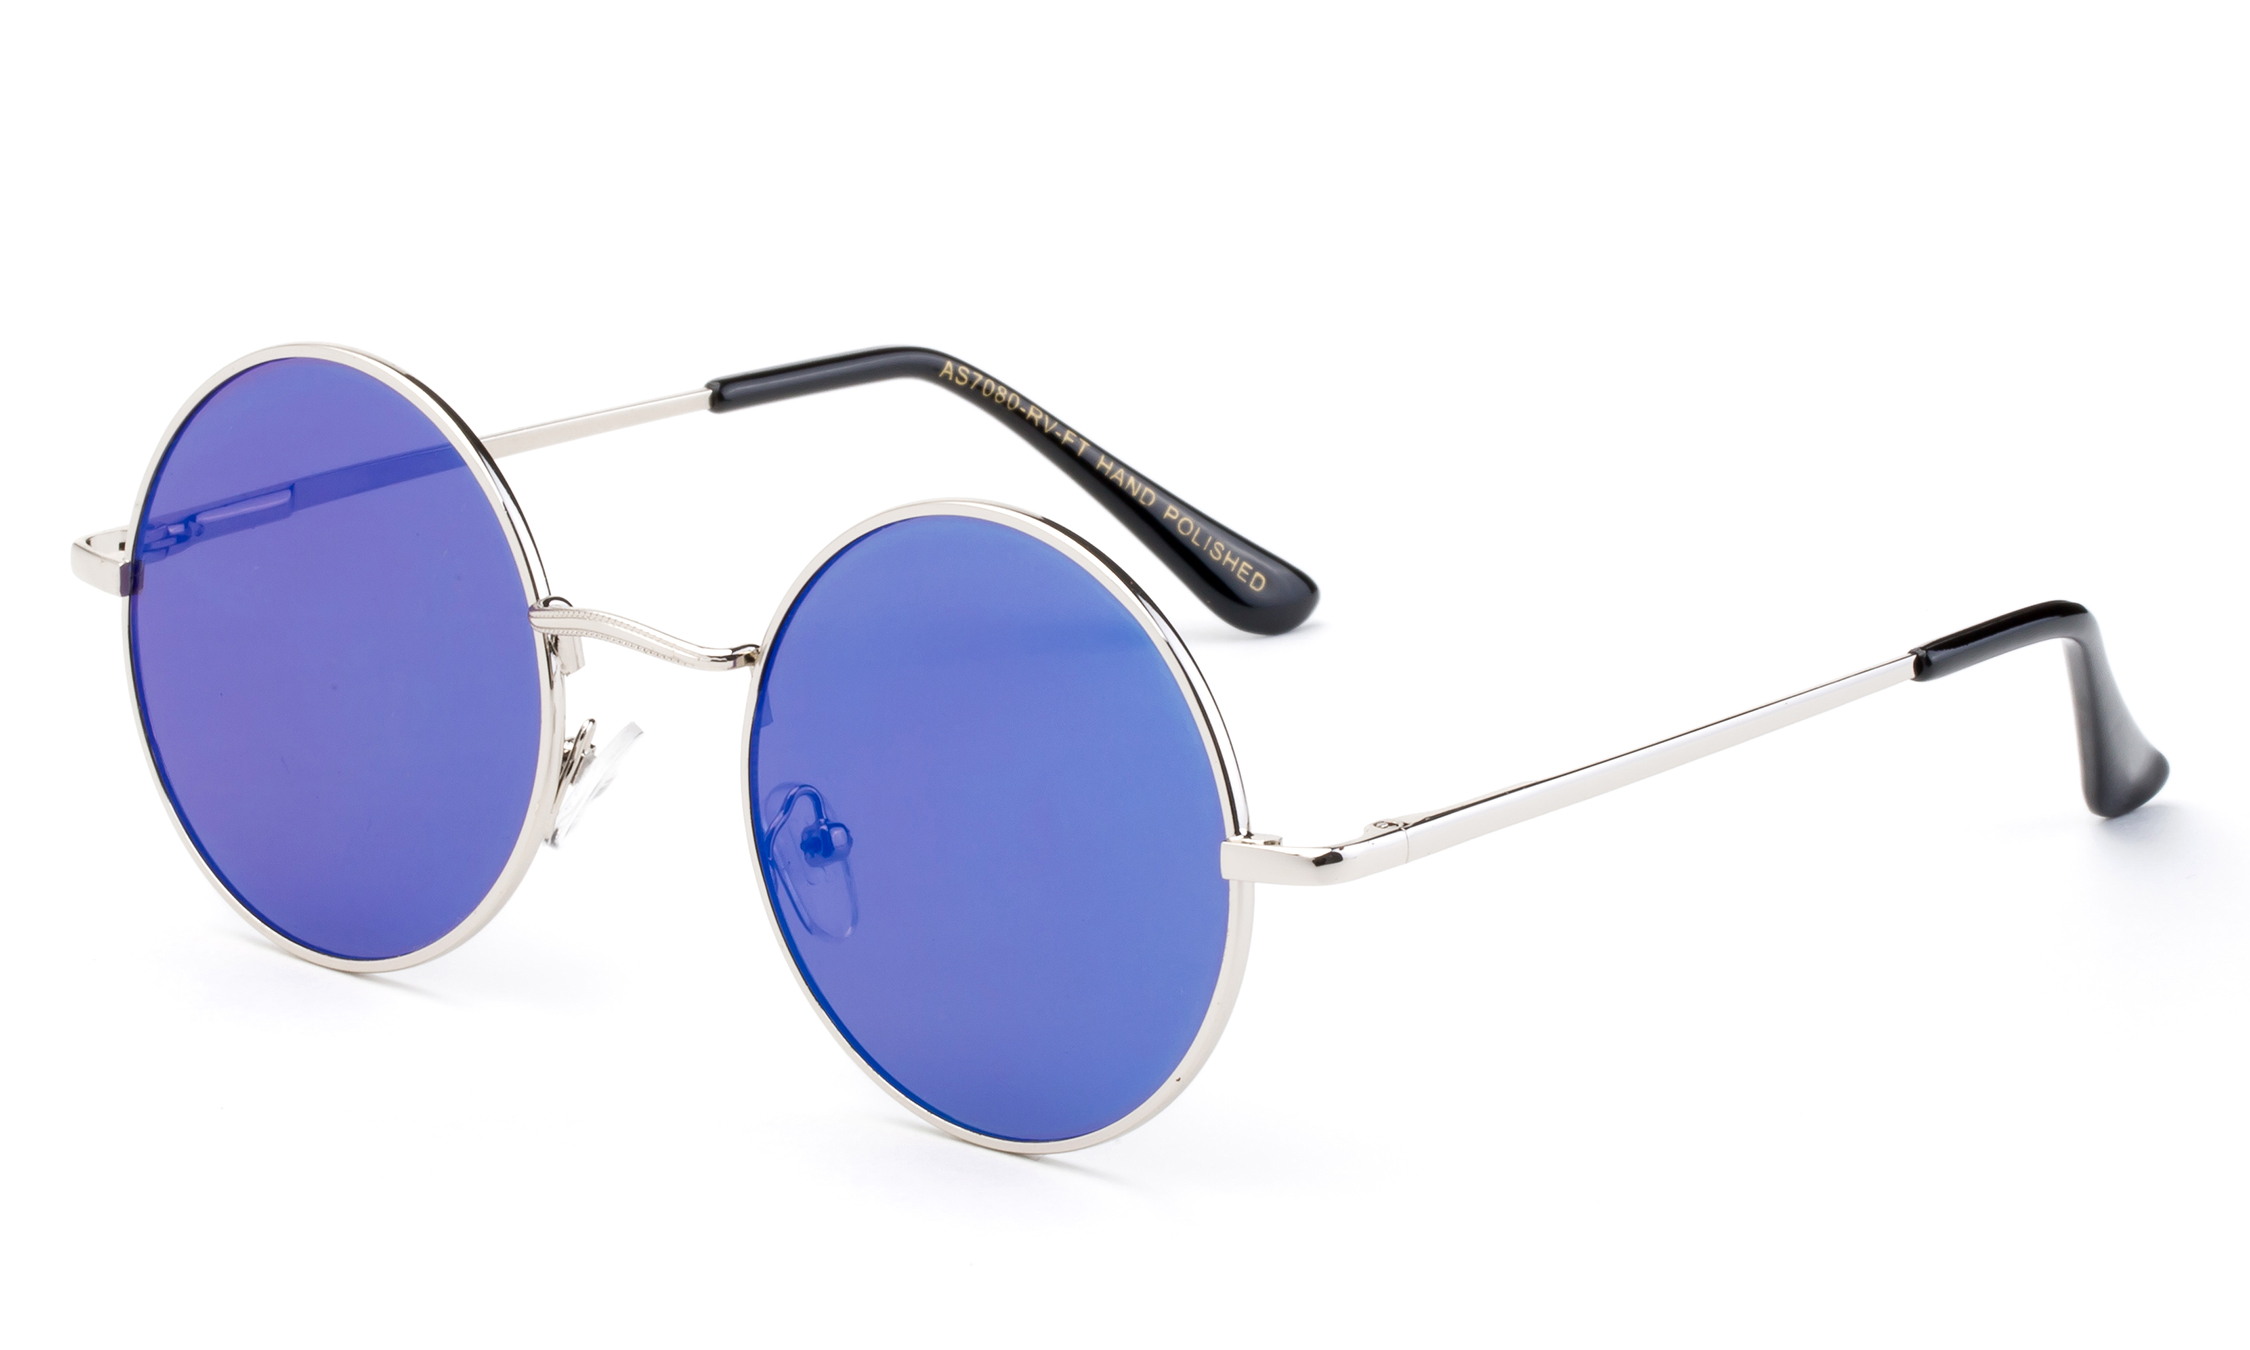 Newbee Fashion Steam Punk Metal Classic Round John Lennon Inspired Flash Mirrored Flat Lenses Hippy 60's Sunglasses Retro - image 1 of 2